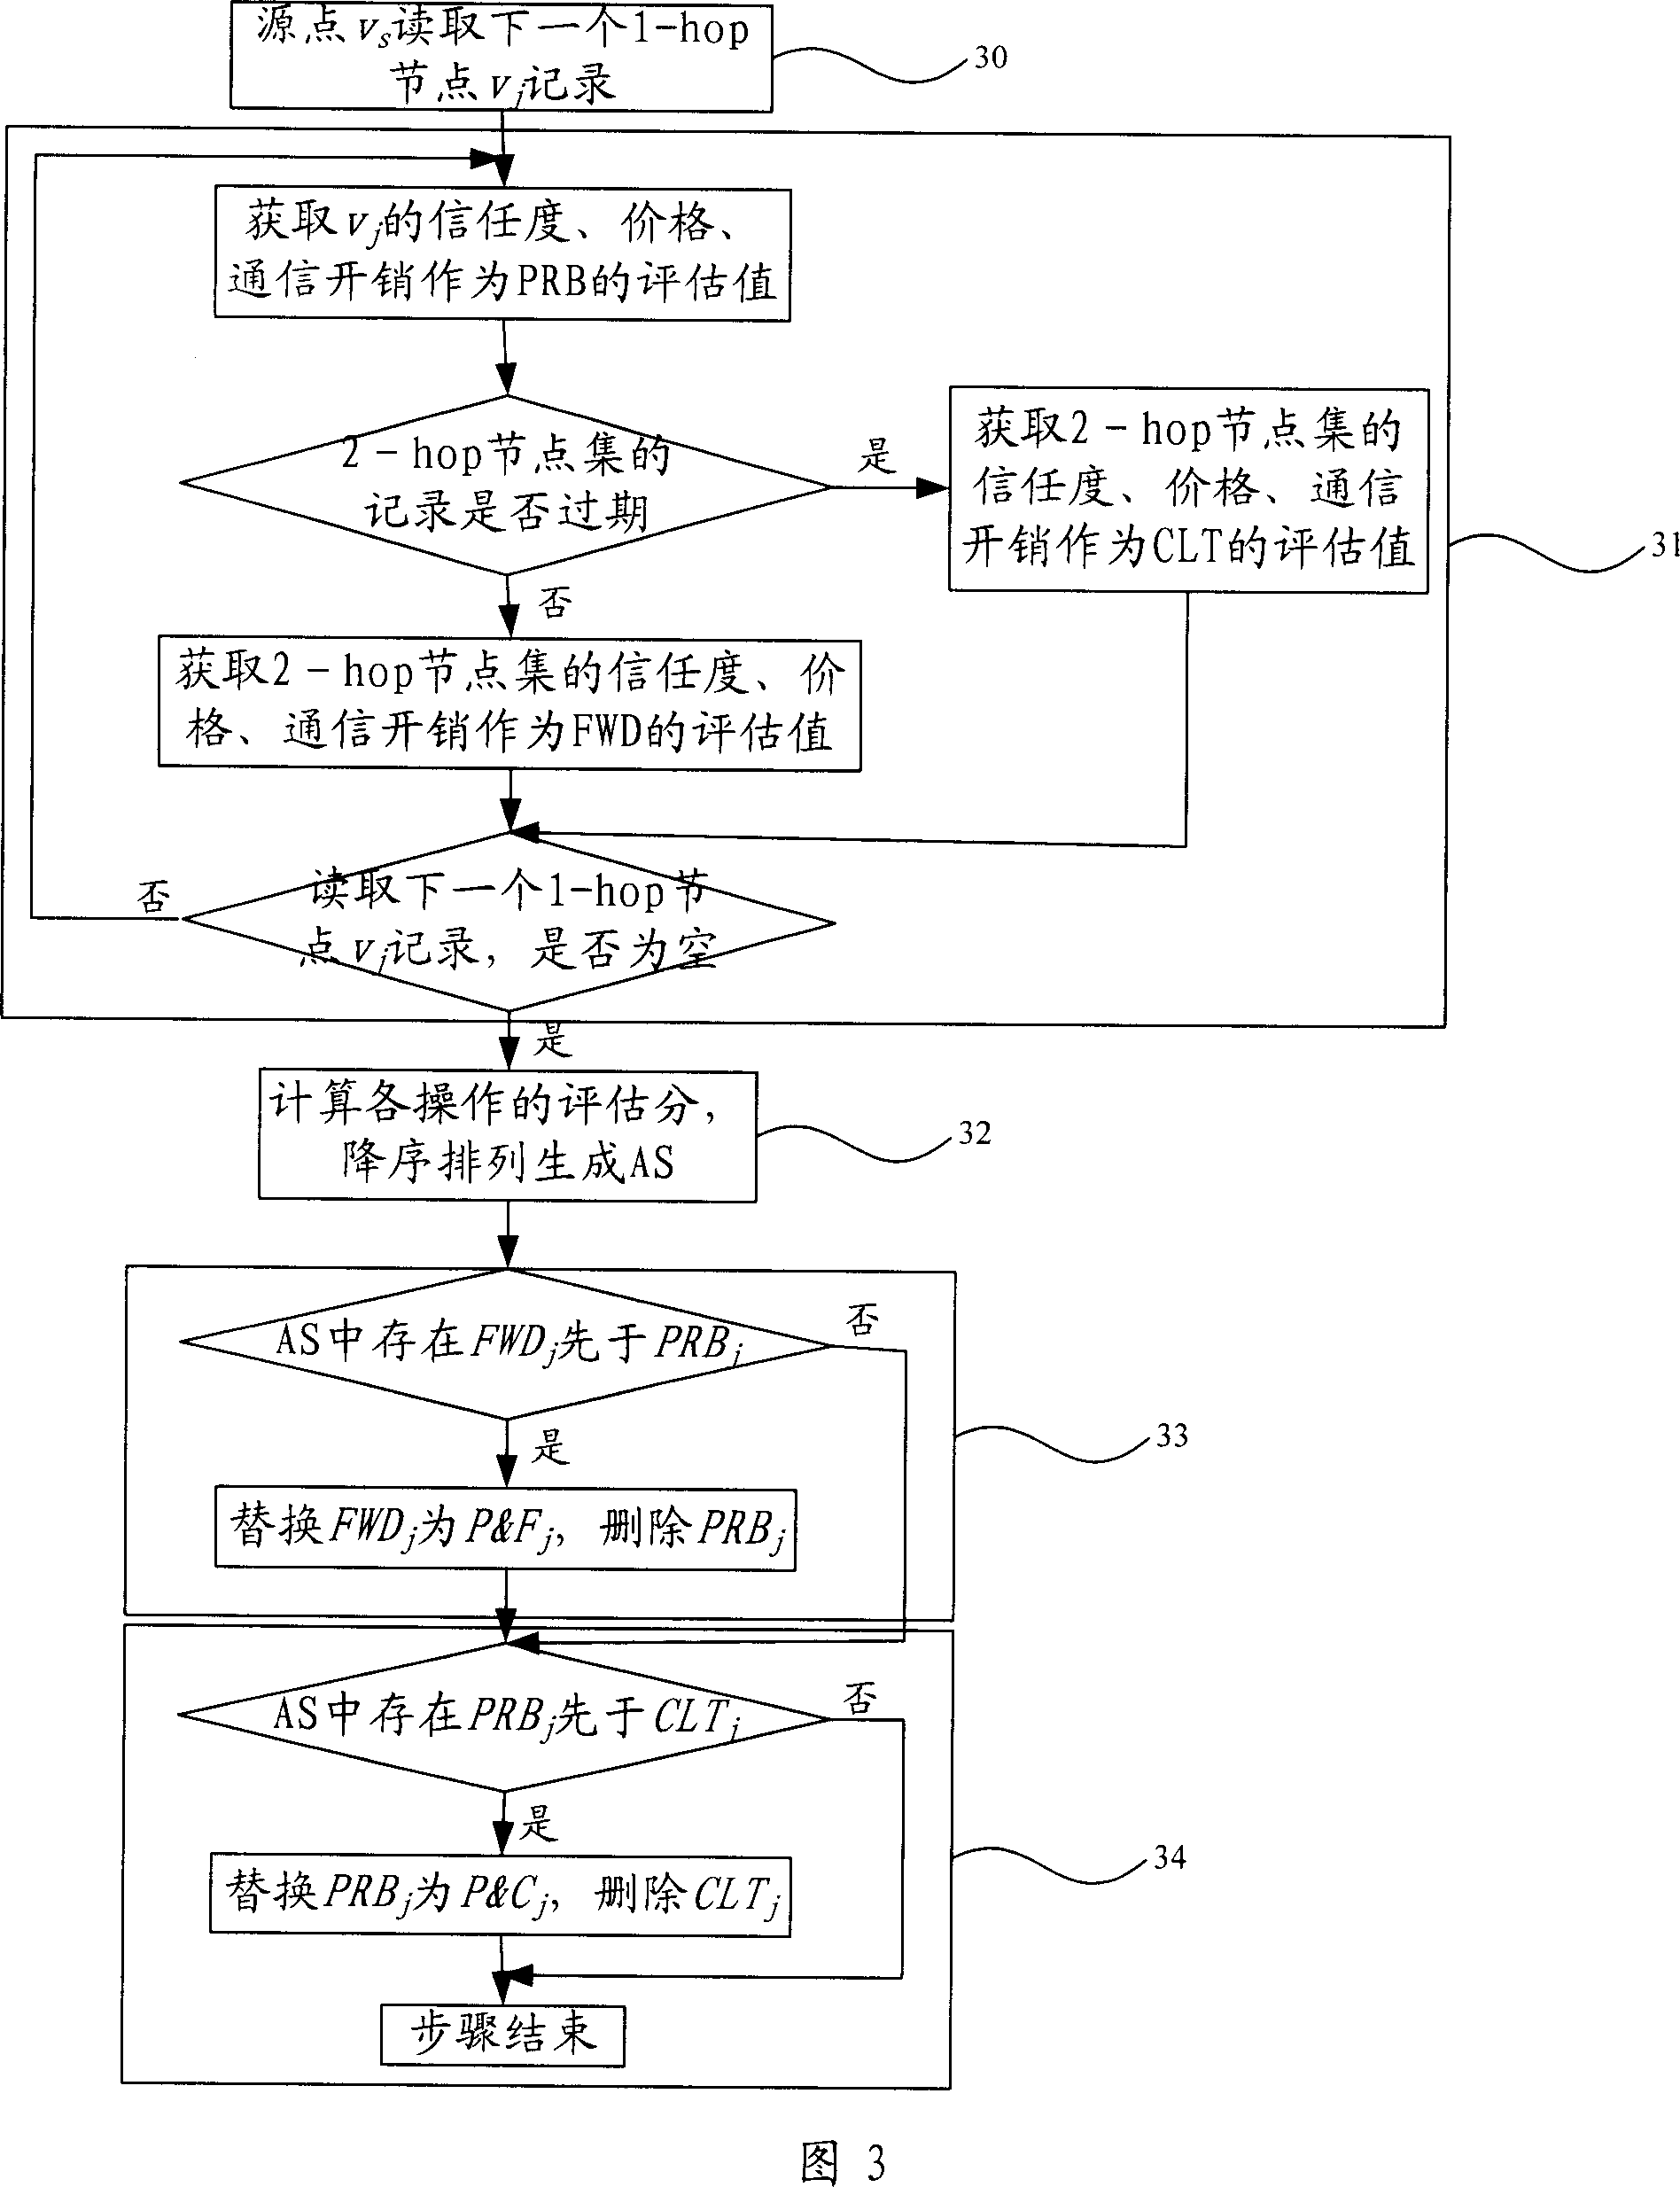 Equation method for network resource load